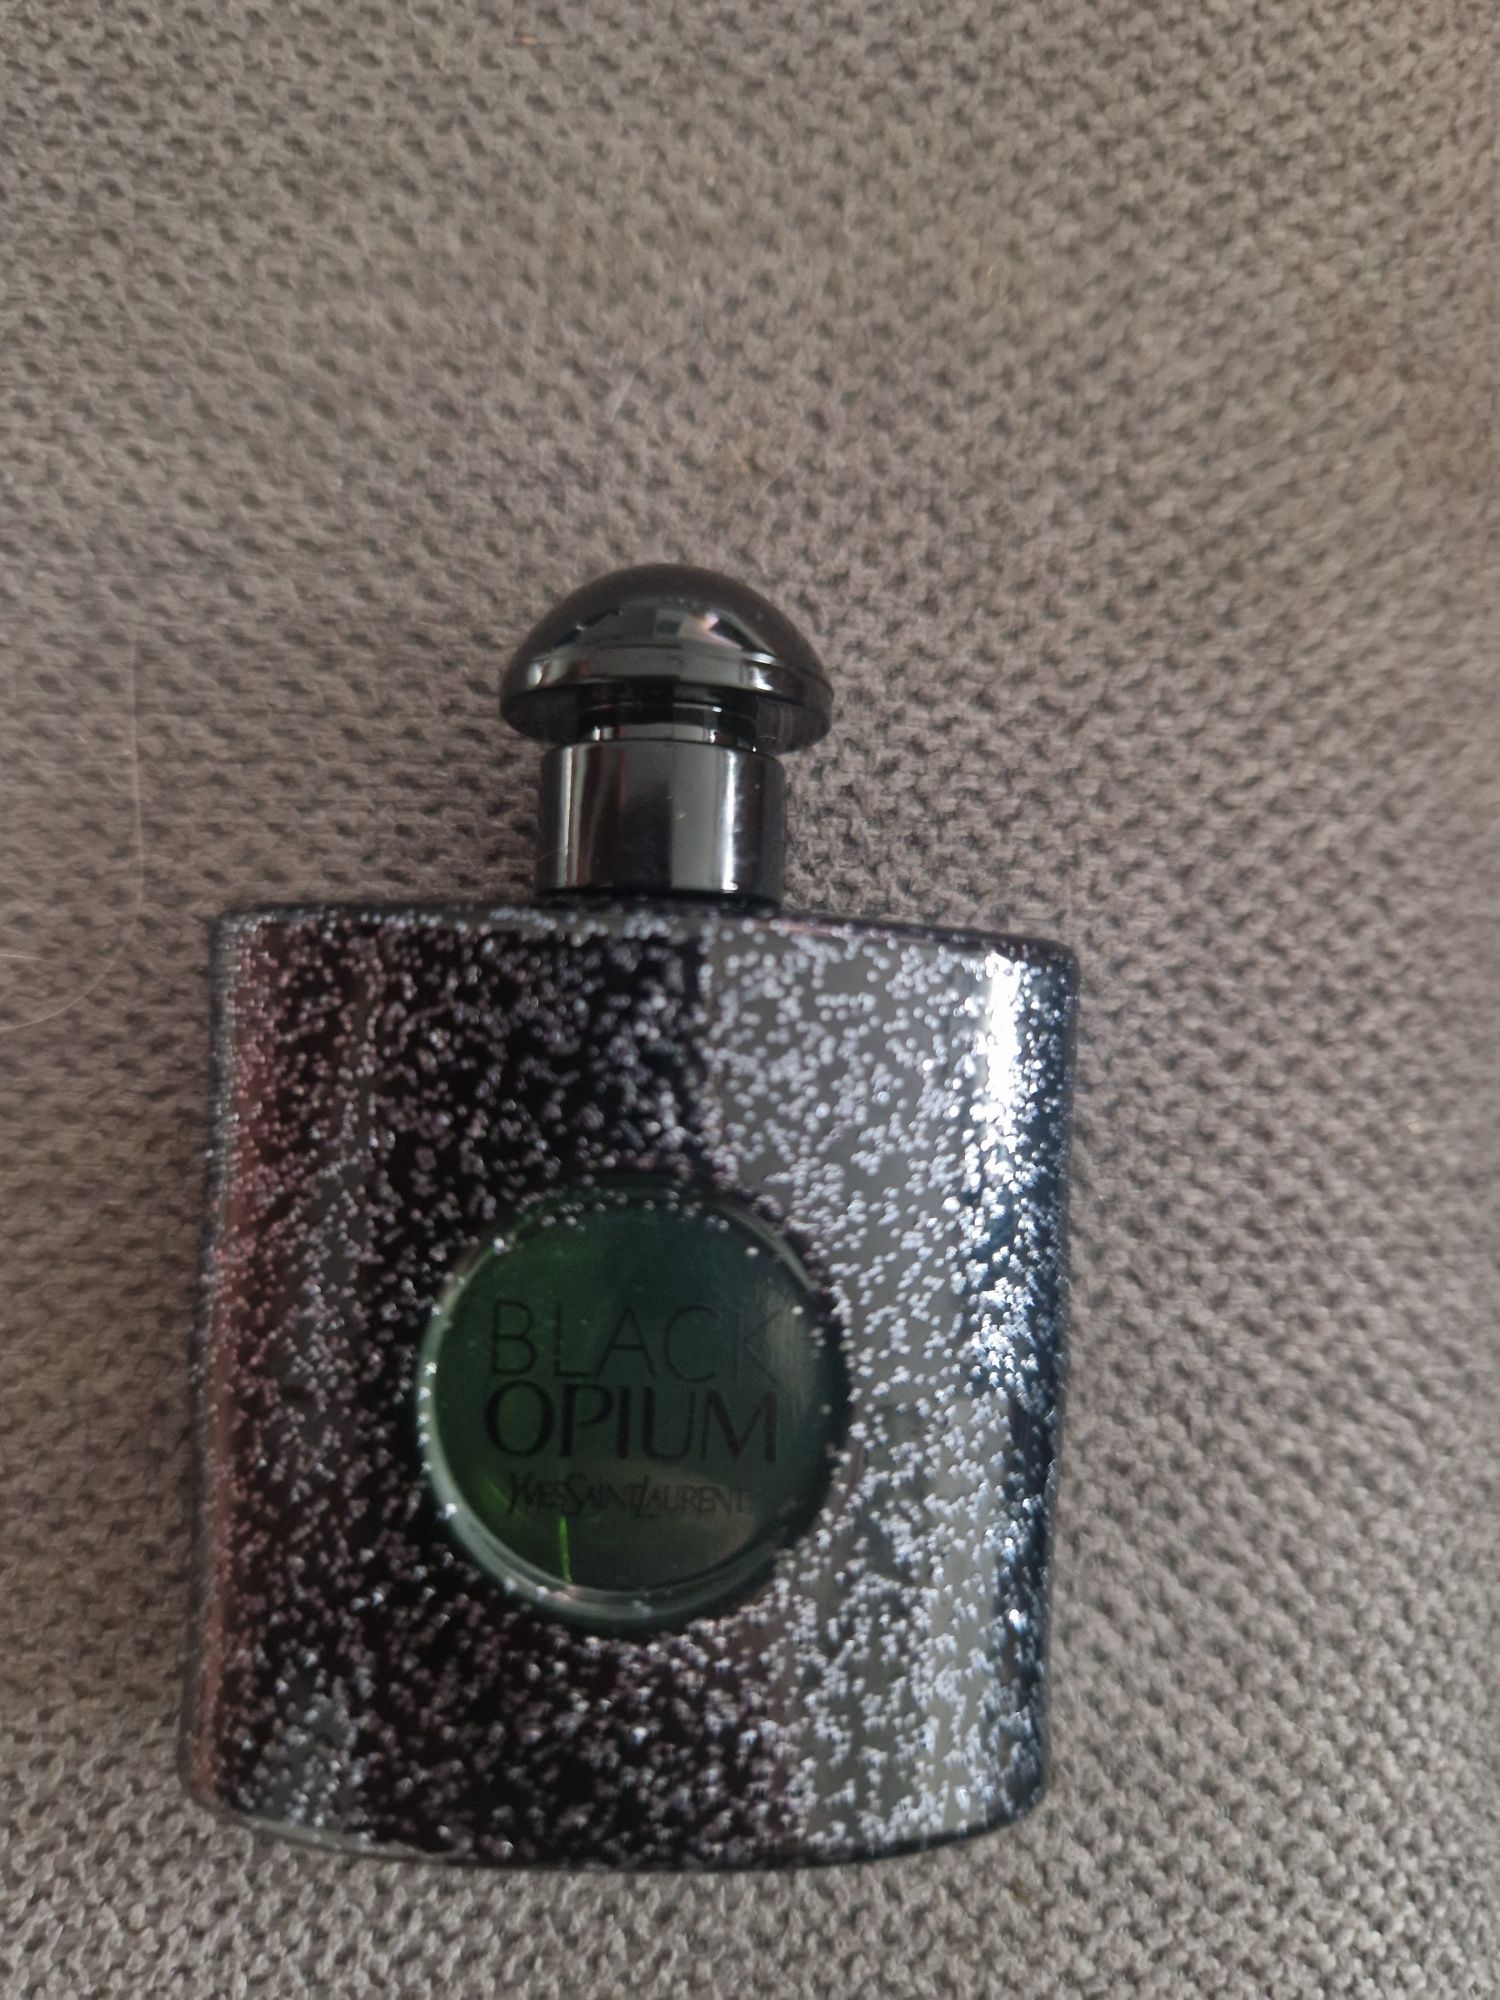 Ysl, Opium black illicit green, miniatura 7,5ml